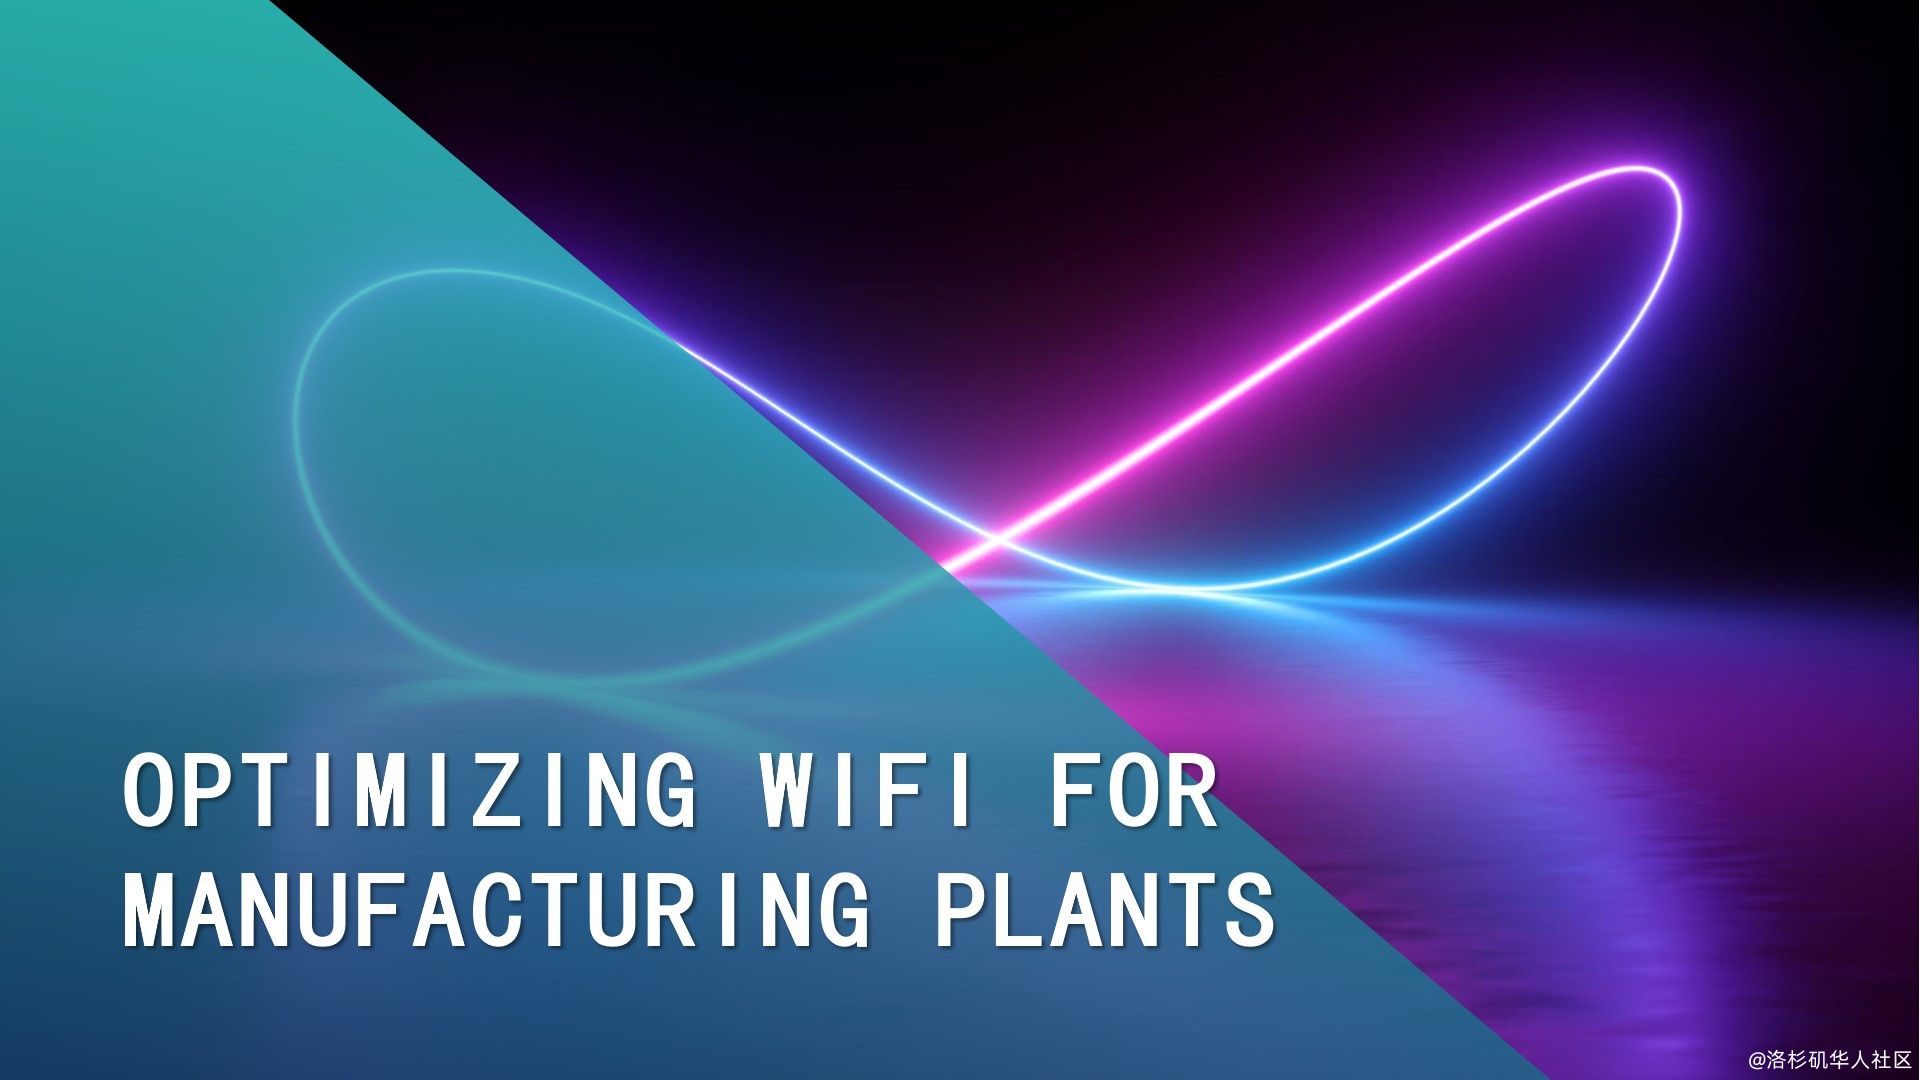 IPQ5332 vs. IPQ4019: Optimizing WiFi for Manufacturing Plants